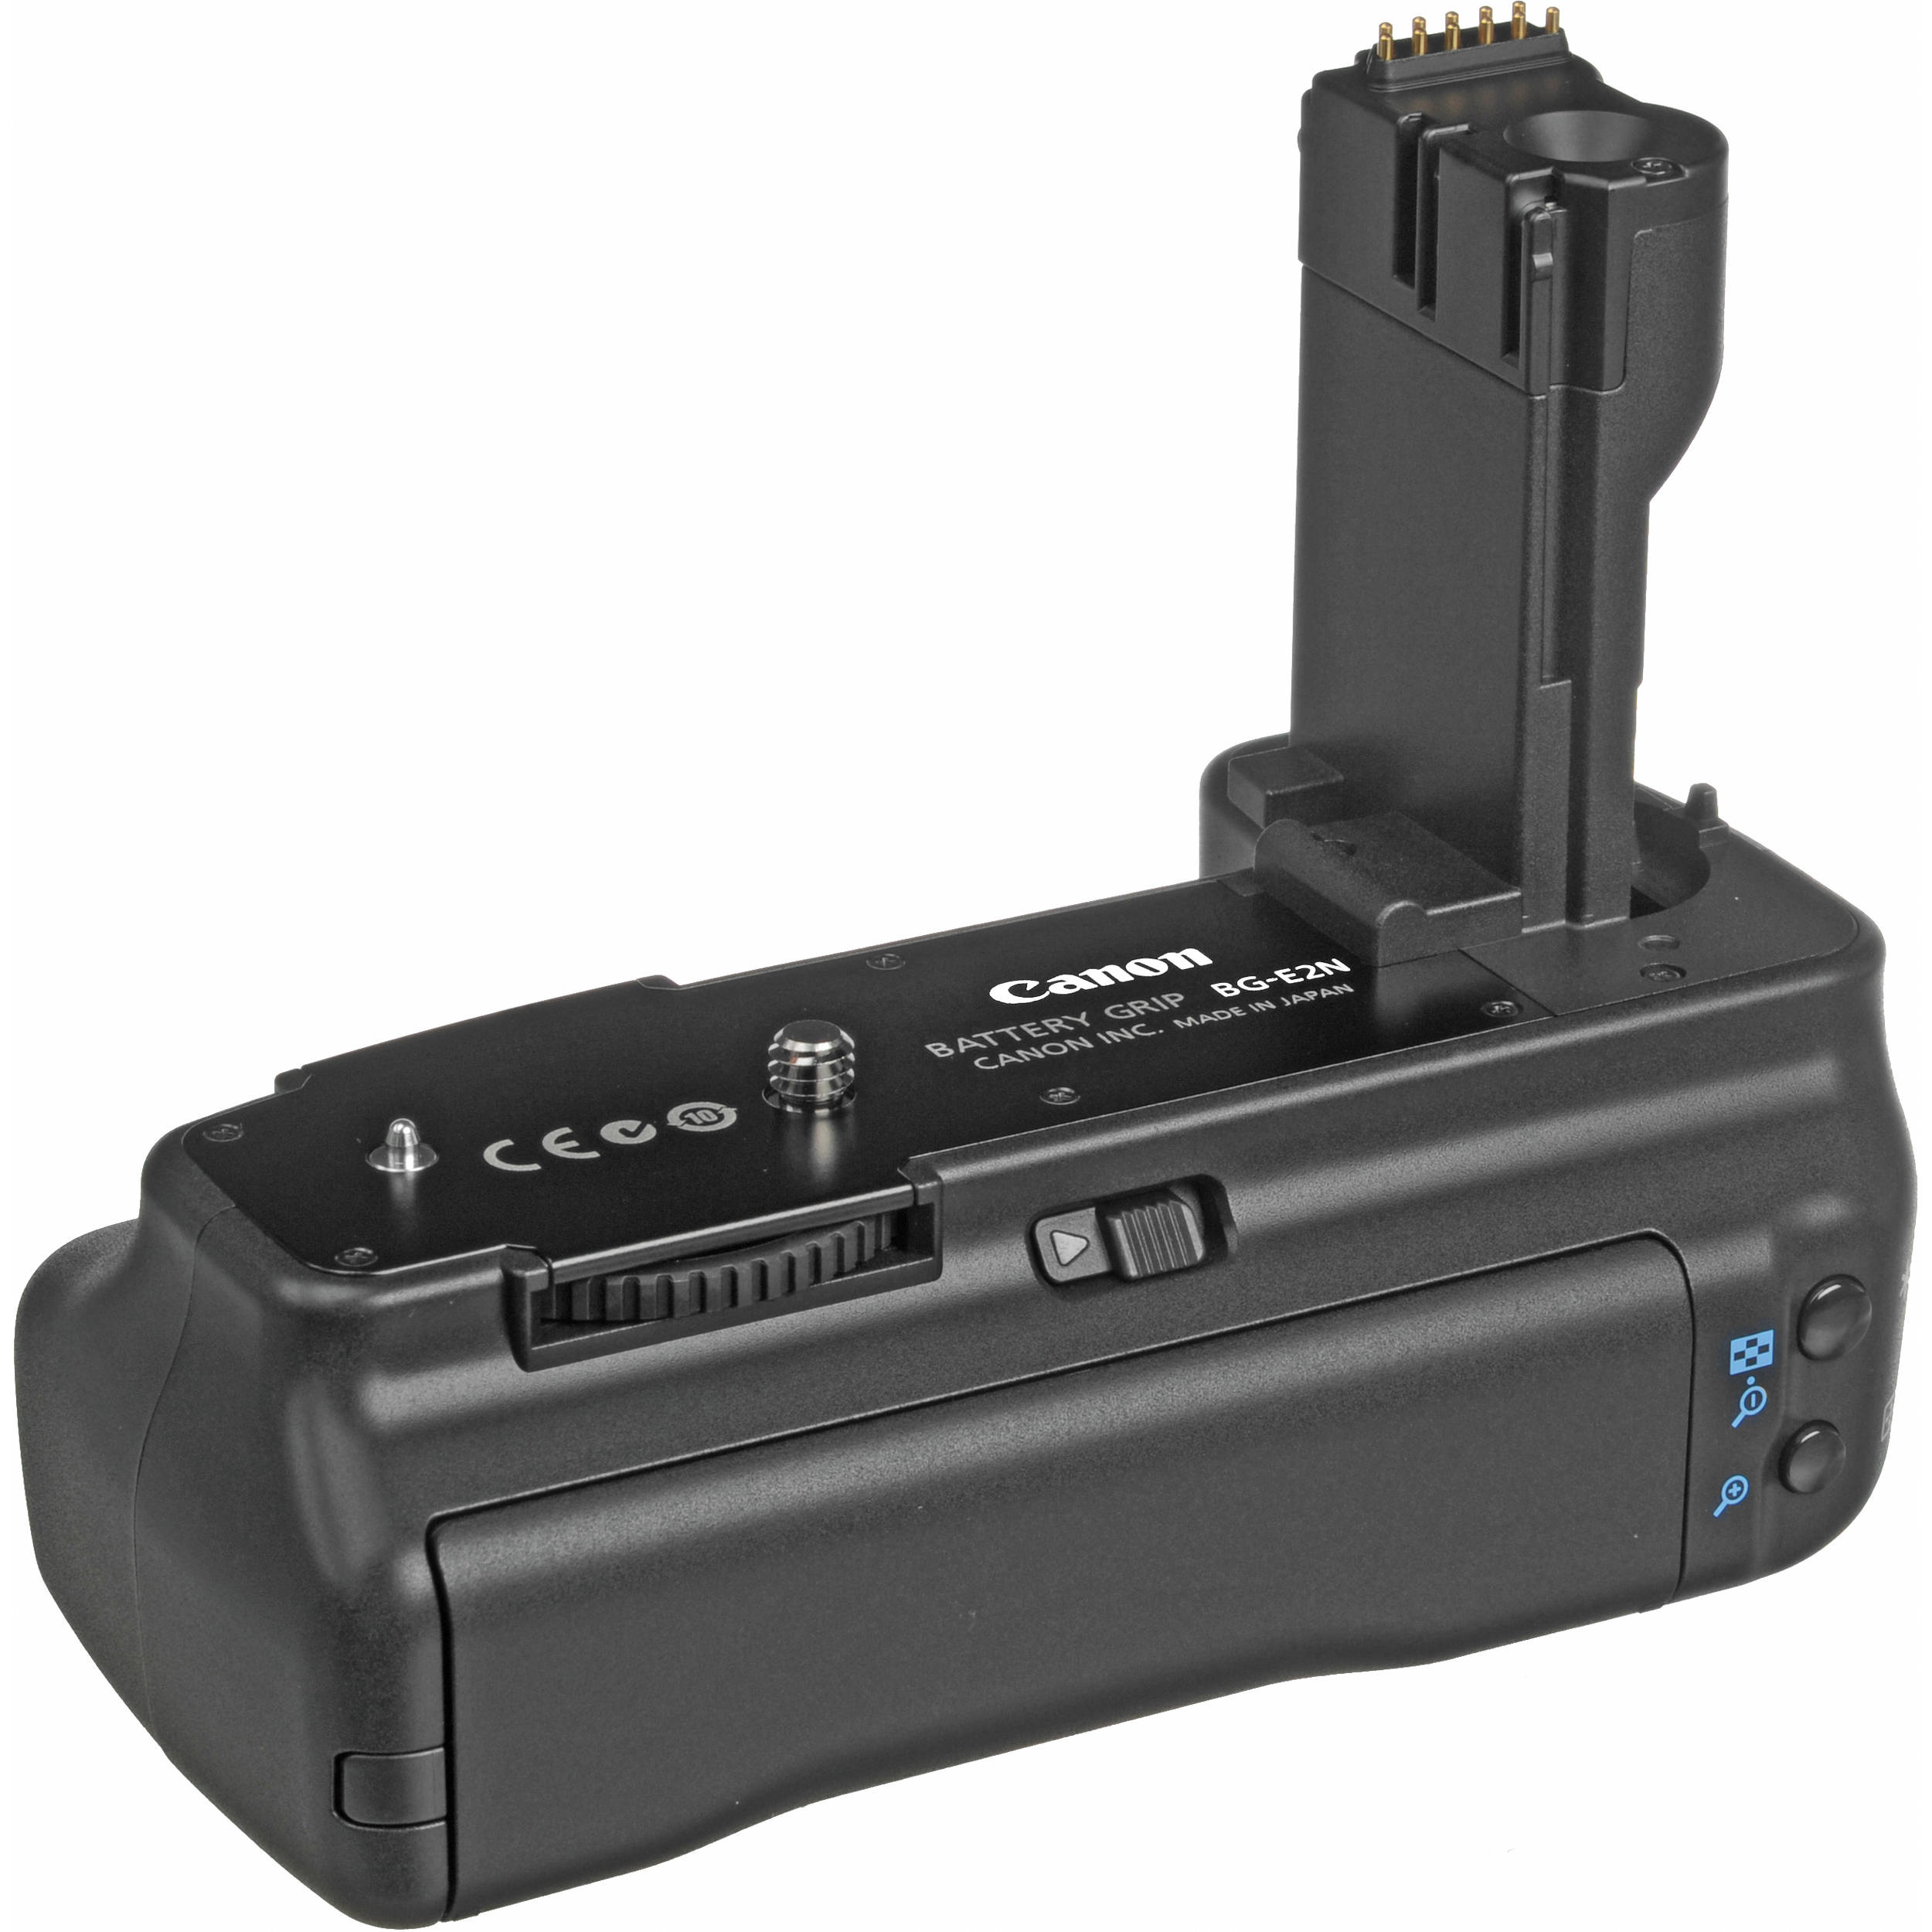 Canon BG-E2N Battery Grip